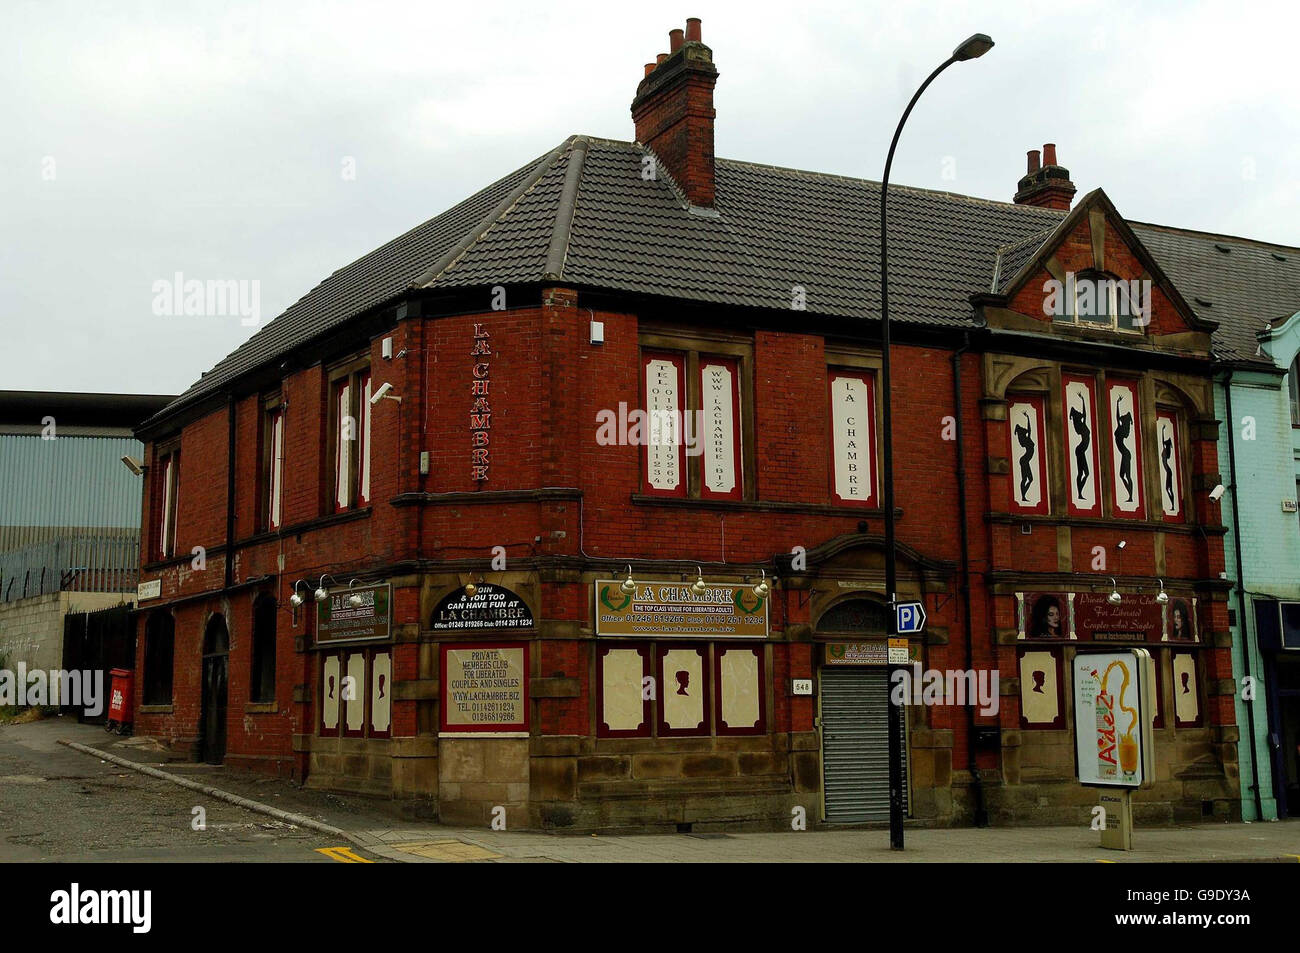 La Chambre, a swingers club in Sheffield, where it is alleged for